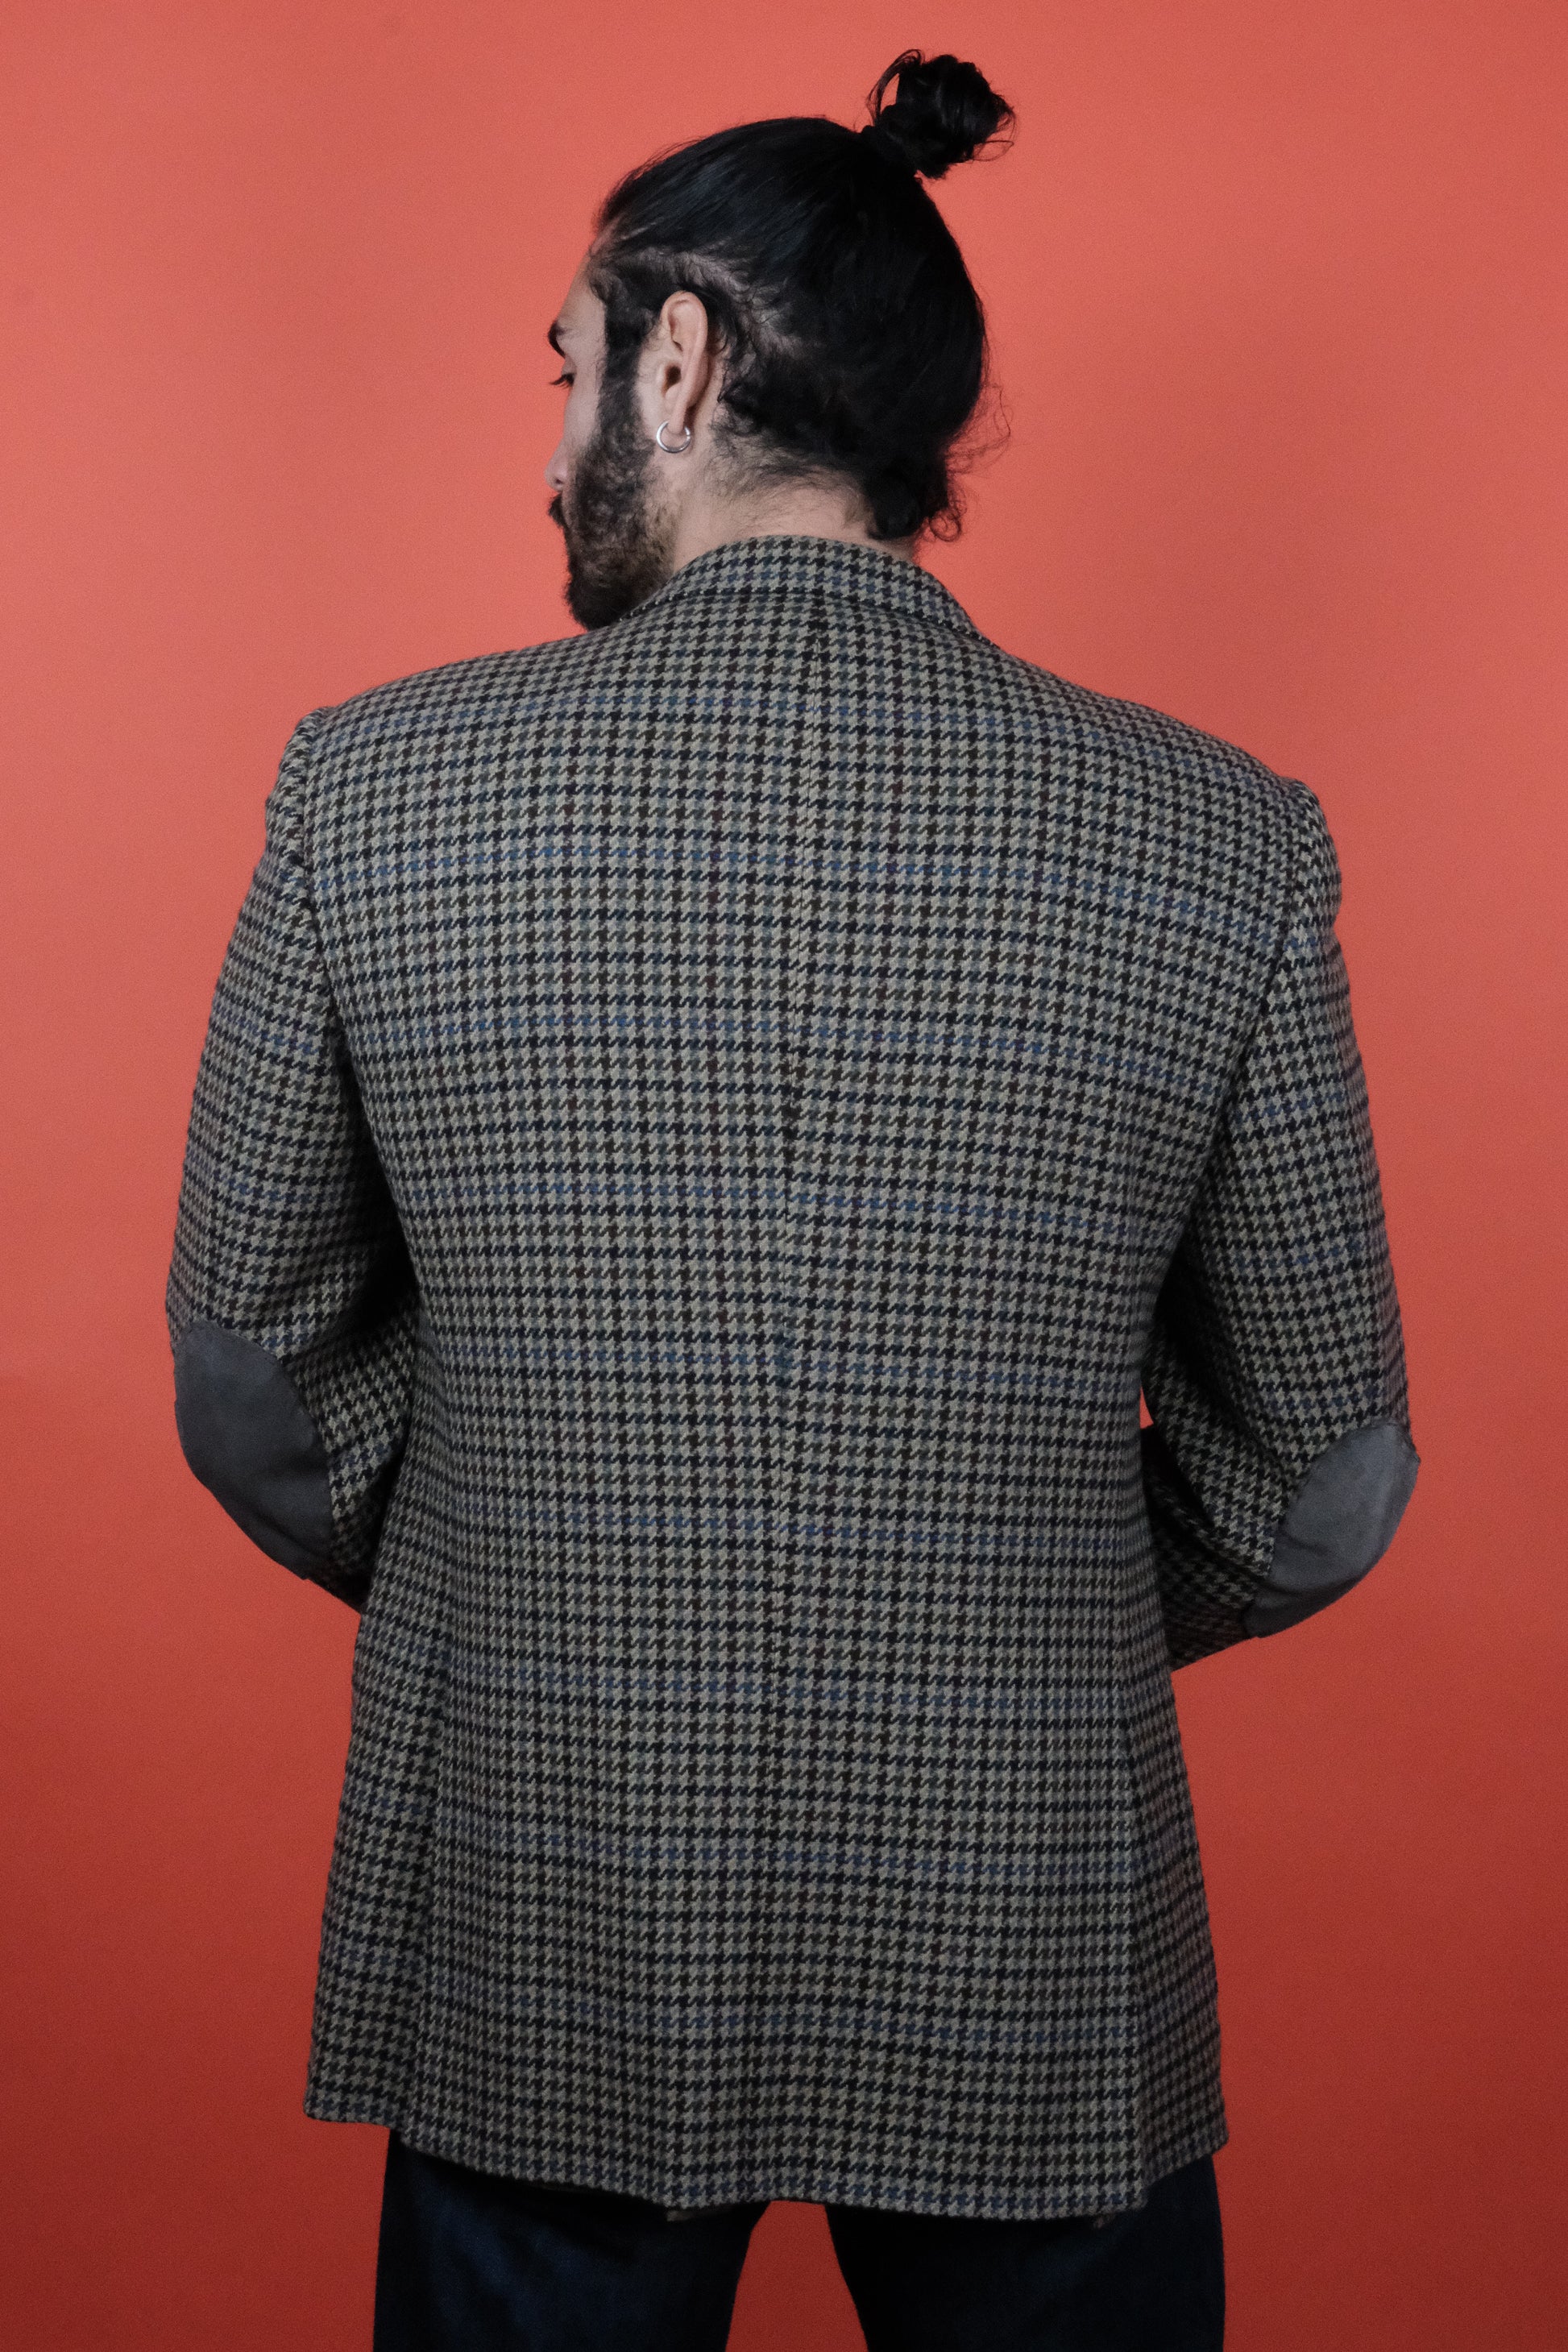 Burberrys' Wool&Cashmere Houndstooth Pattern Blazer - vintage clothing clochard92.com